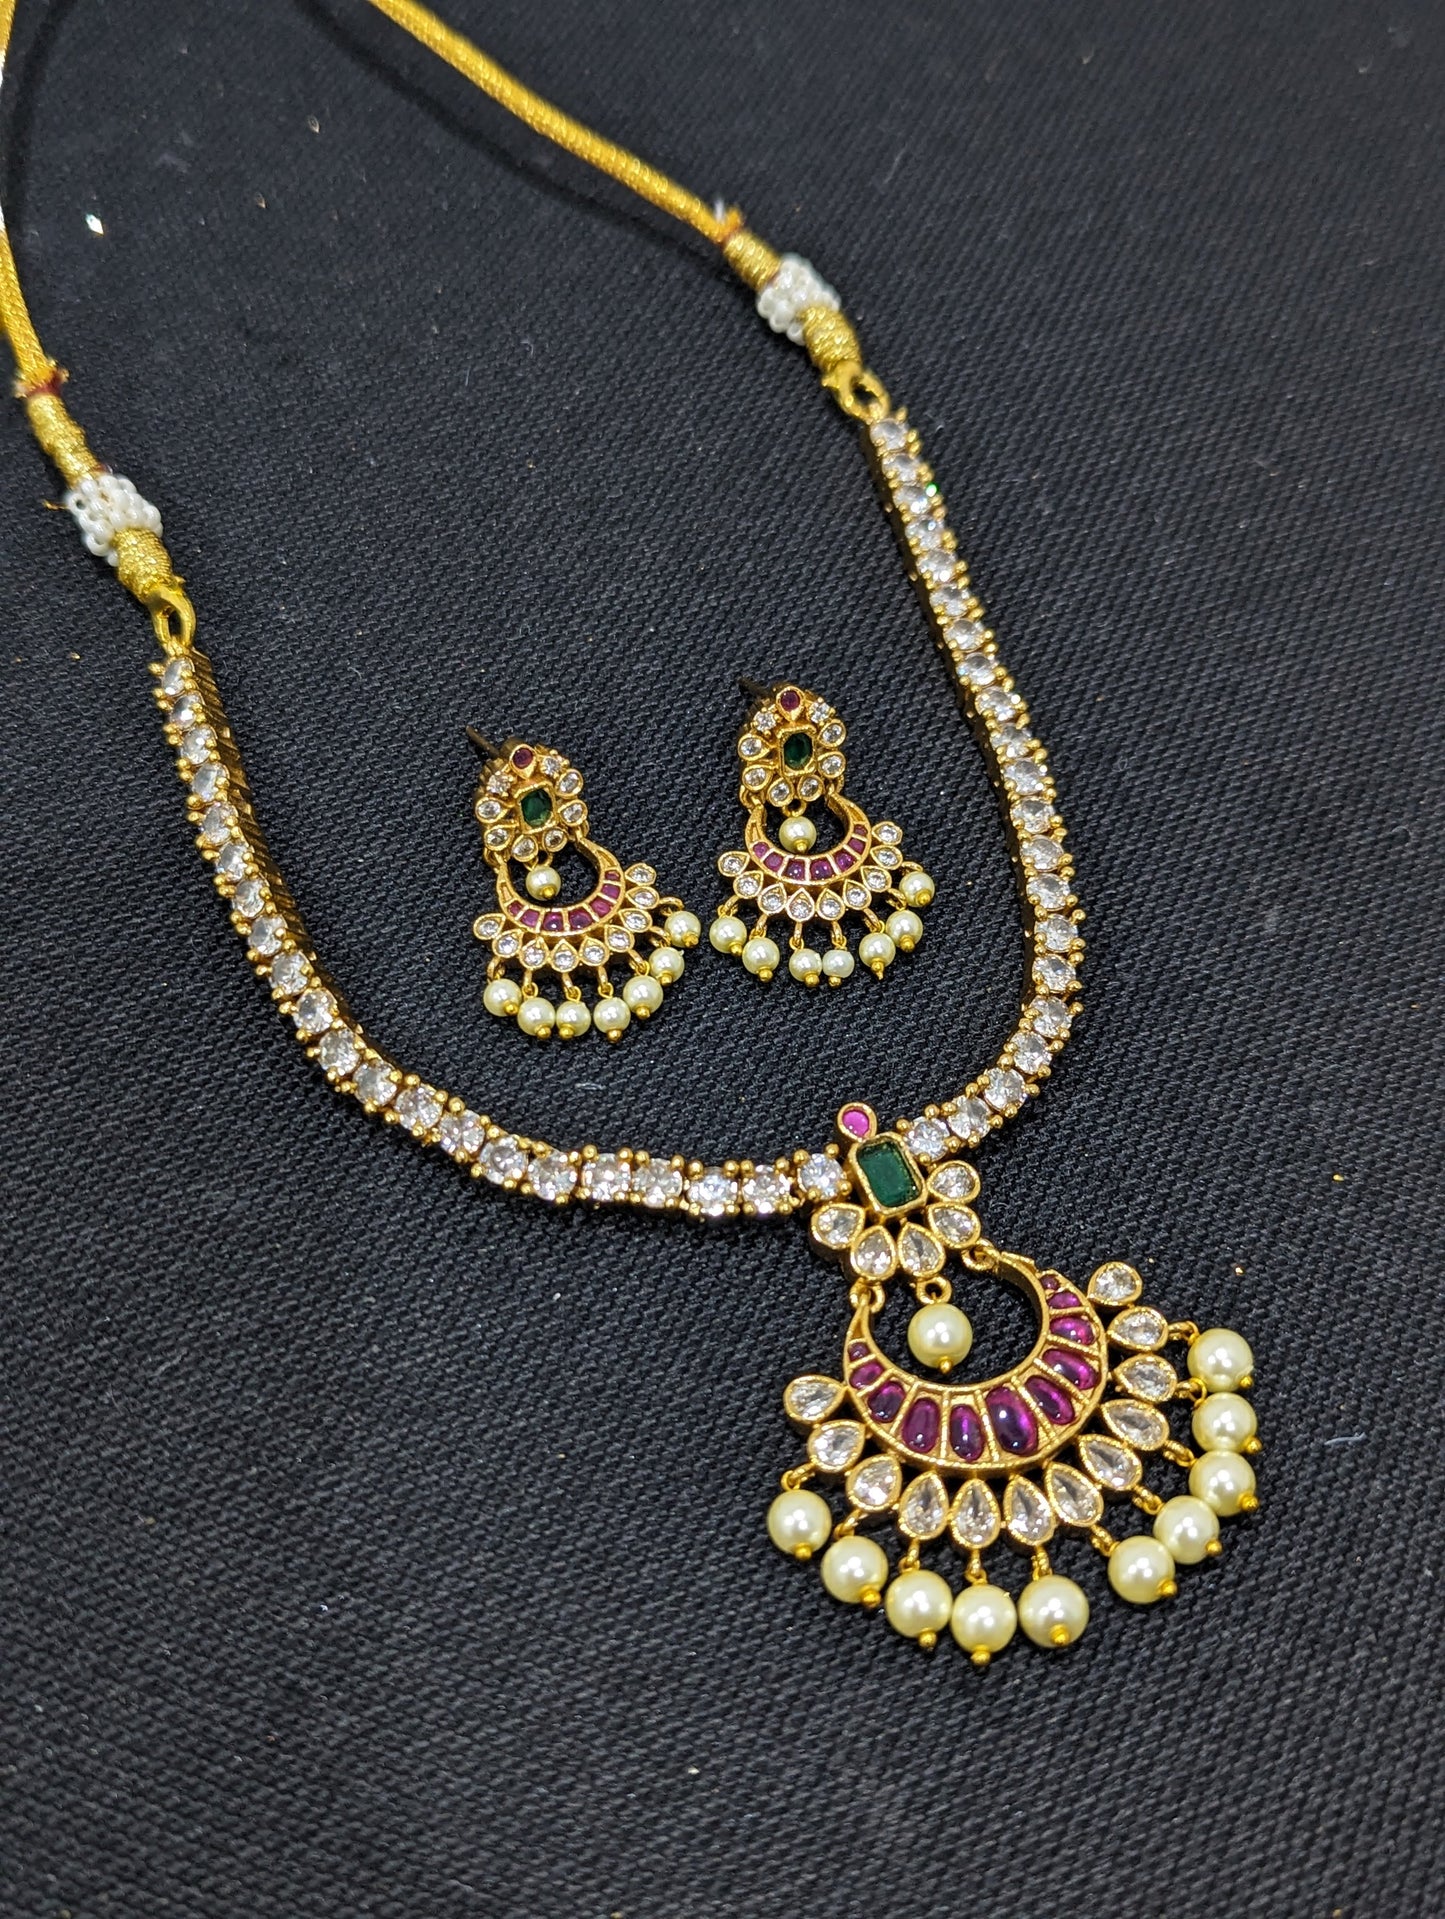 Adigai style Choker Necklace and Earrings set